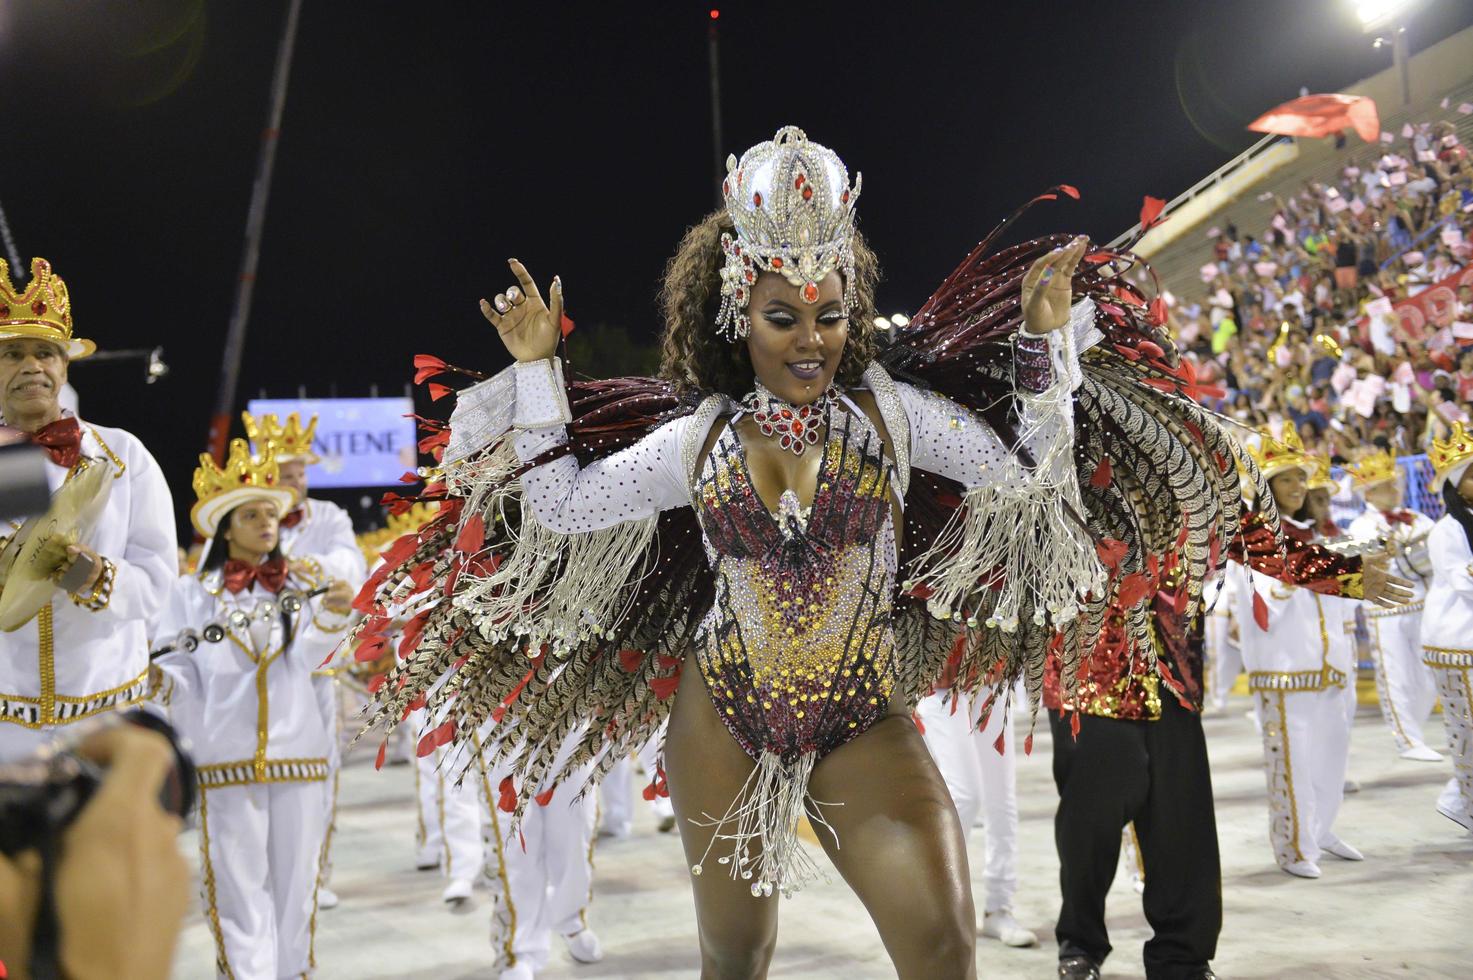 rio de janeiro, rj brazil - 09 de febrero de 2018 - desfile de la escuela de samba en el sambodromo. unidos do porto da pedra durante el festival en la calle marques de sapucai. foto